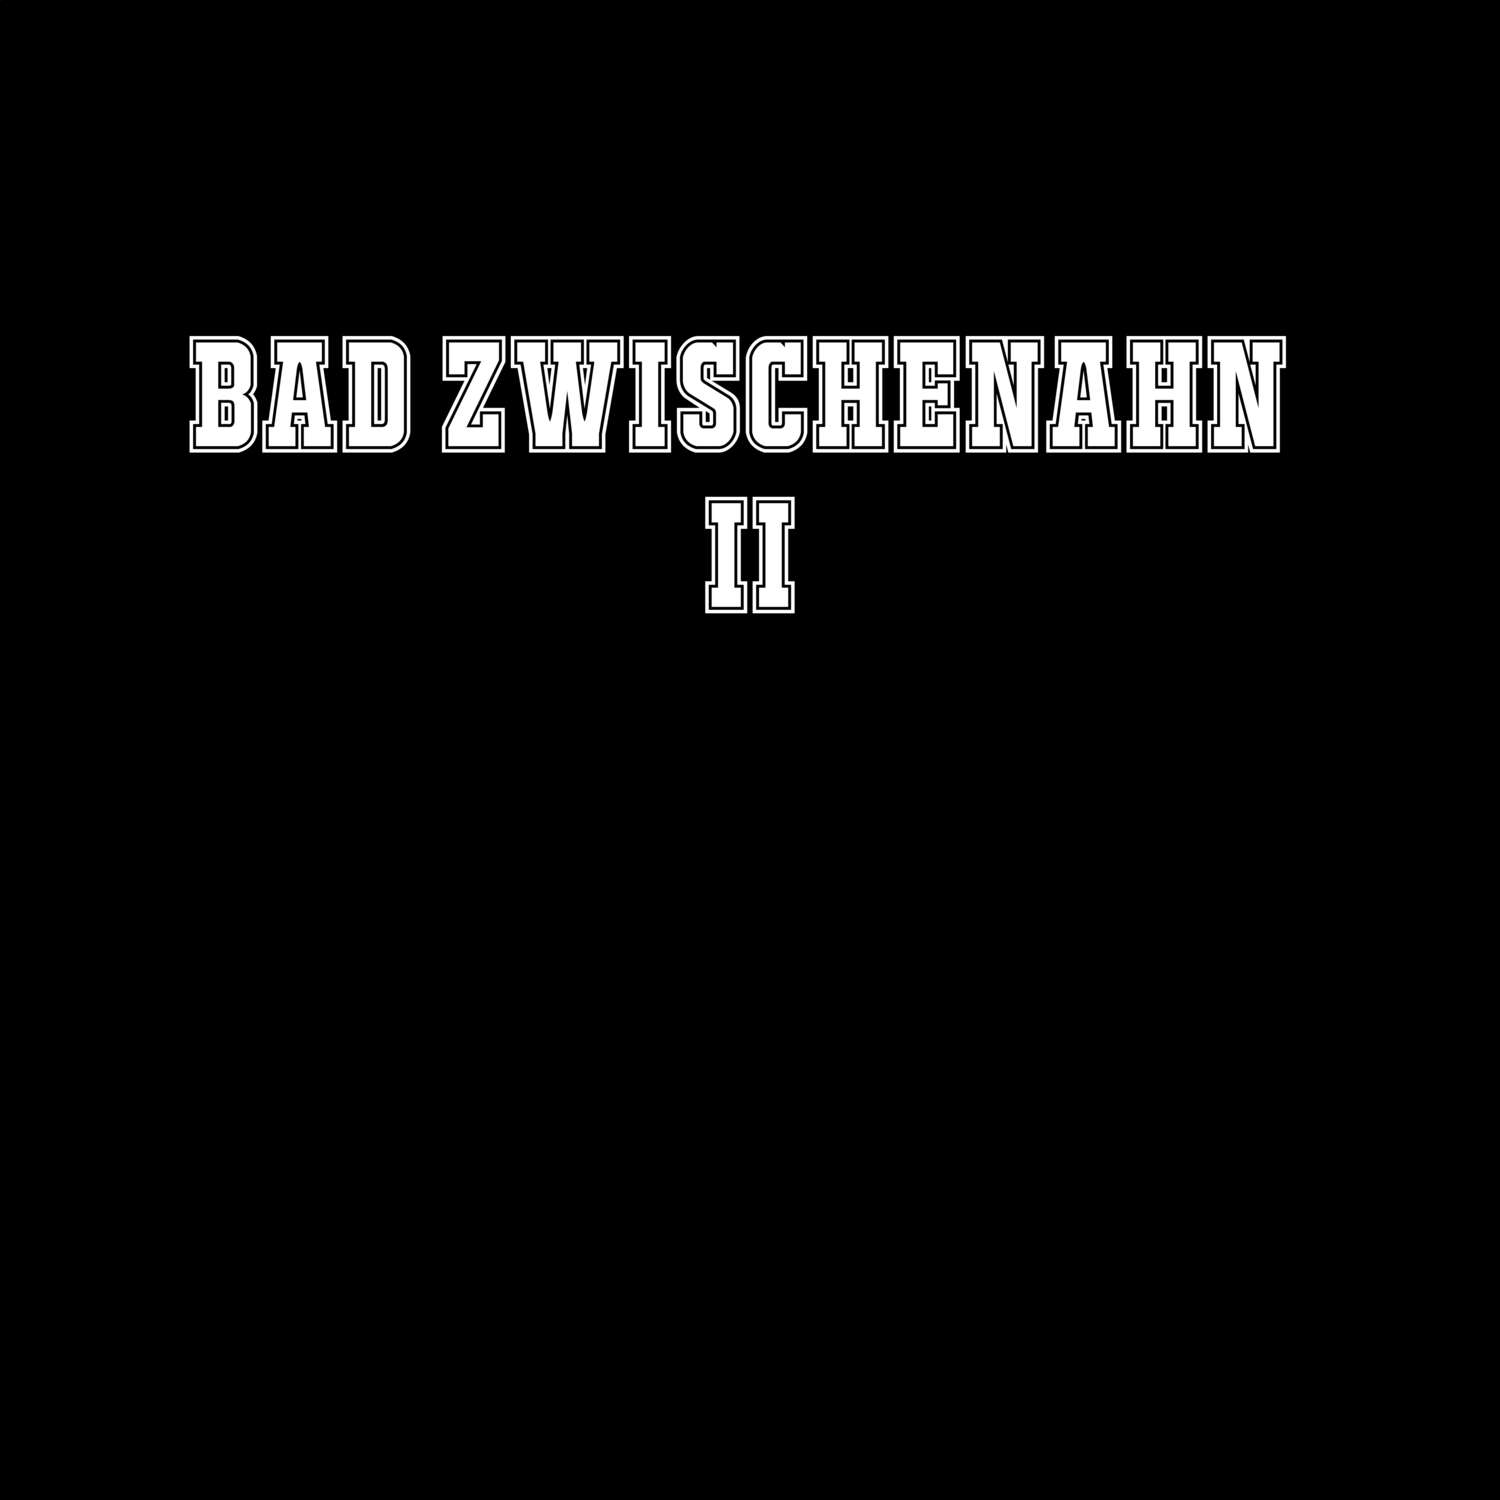 Bad Zwischenahn II T-Shirt »Classic«